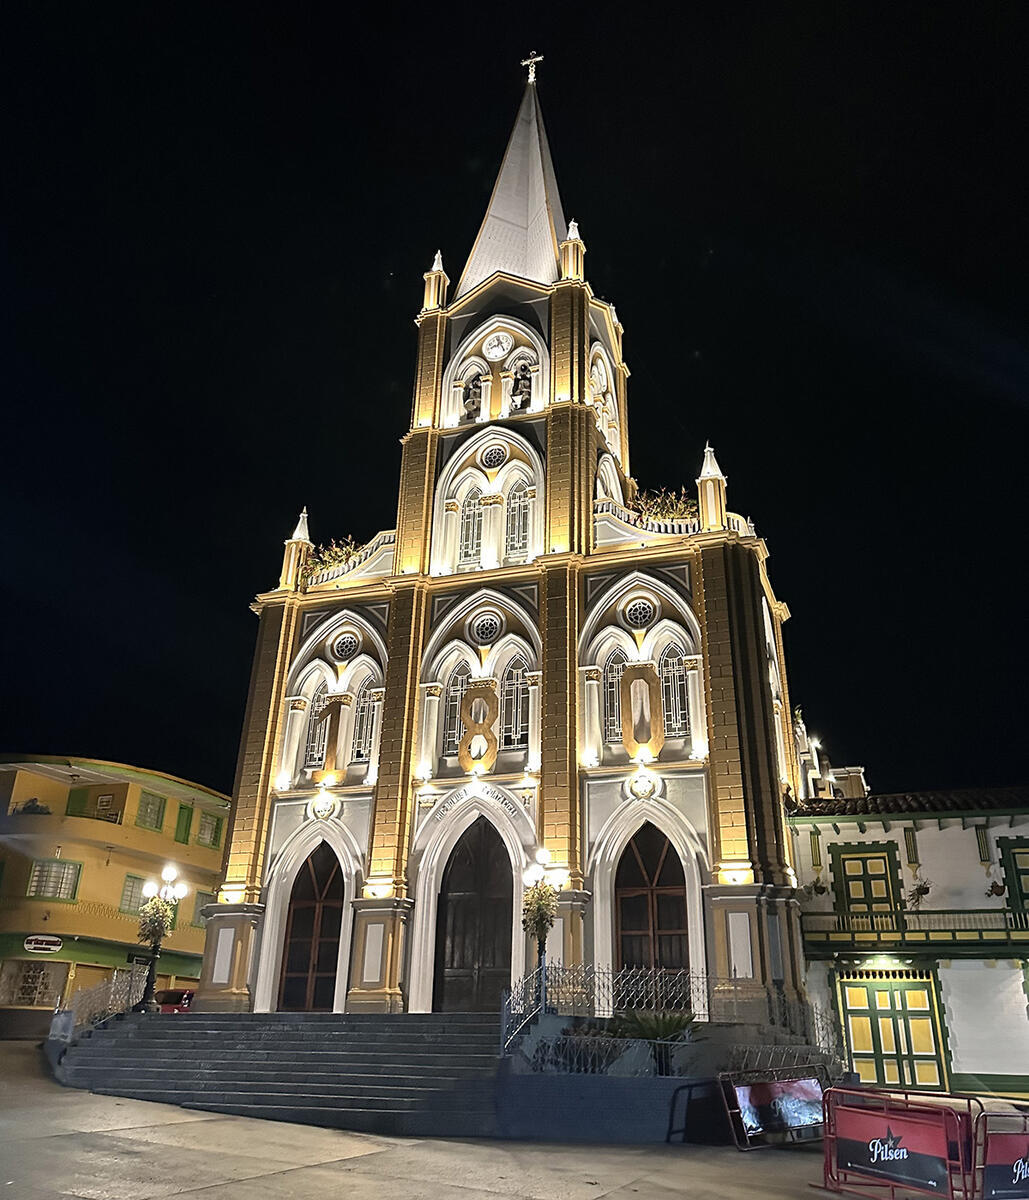 A tall, dramatically lit church at night